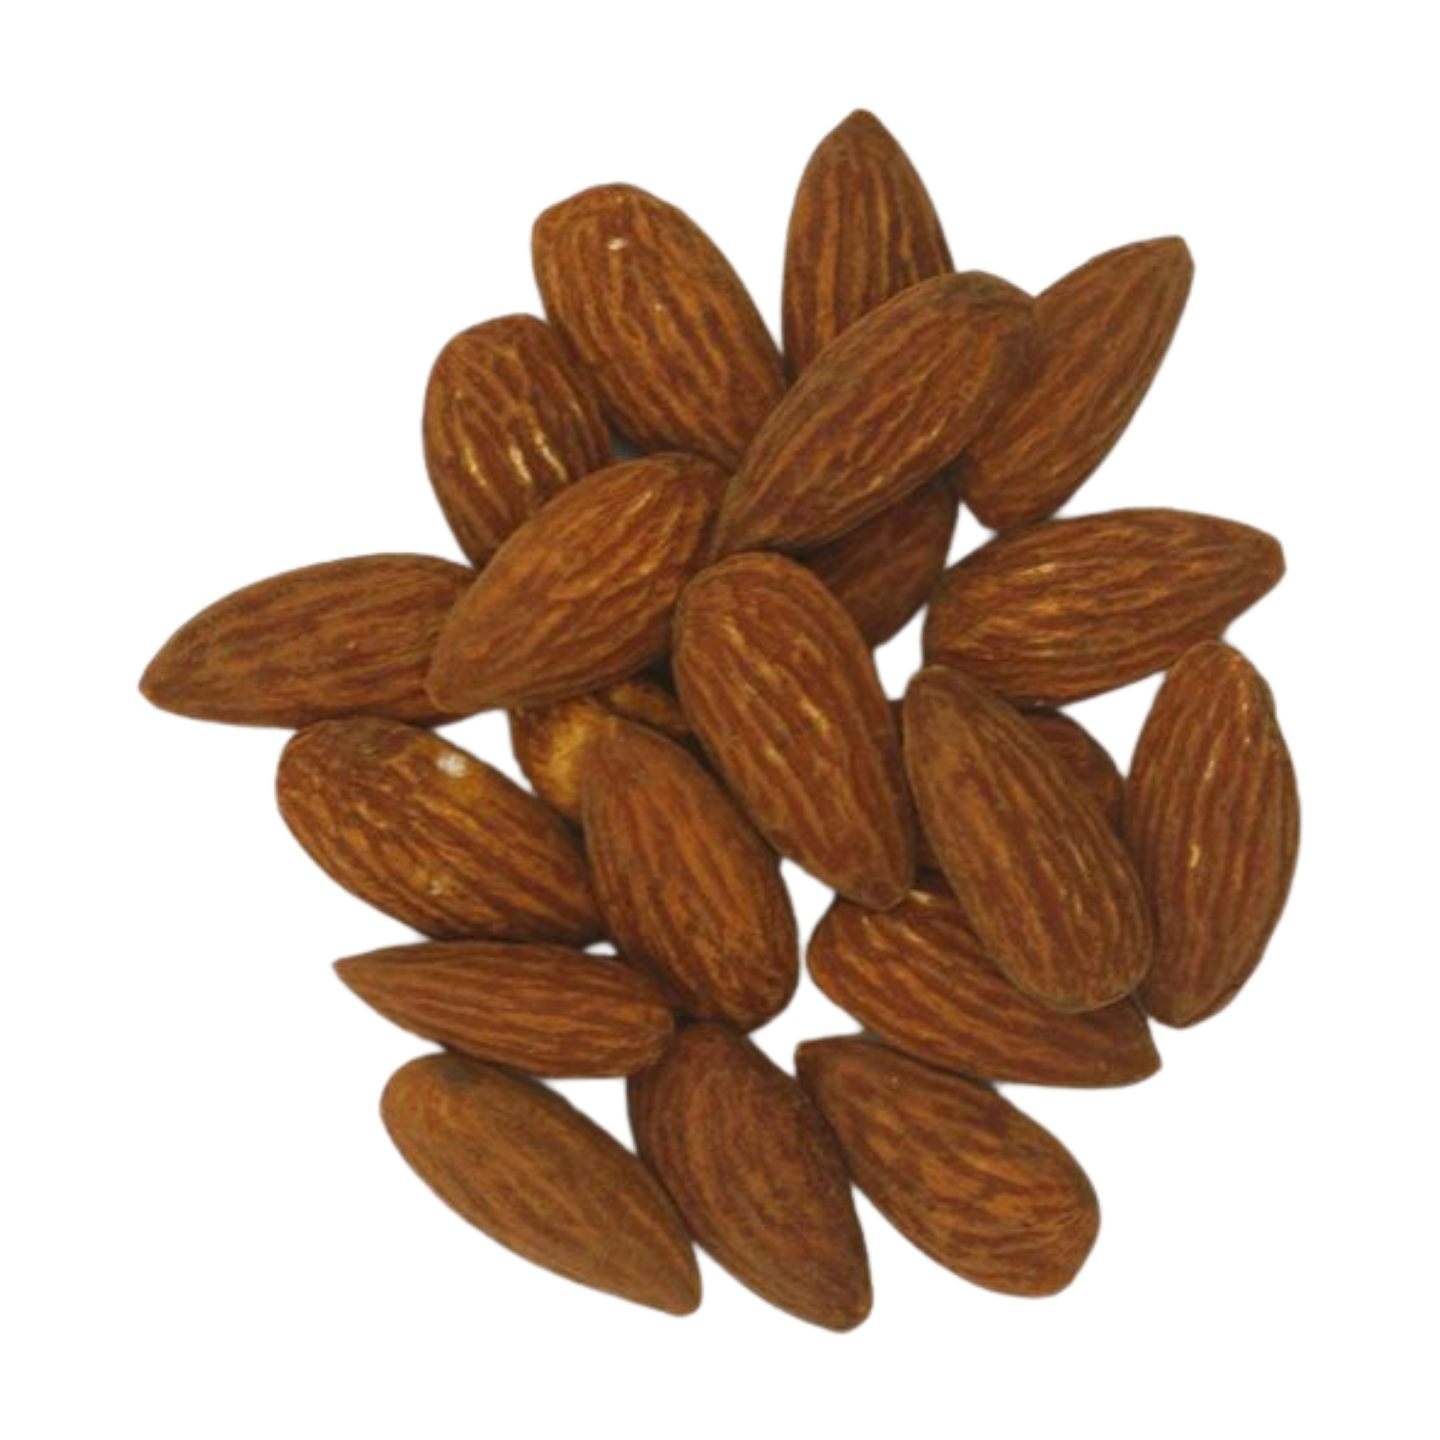 Tamari Flavoured Almonds